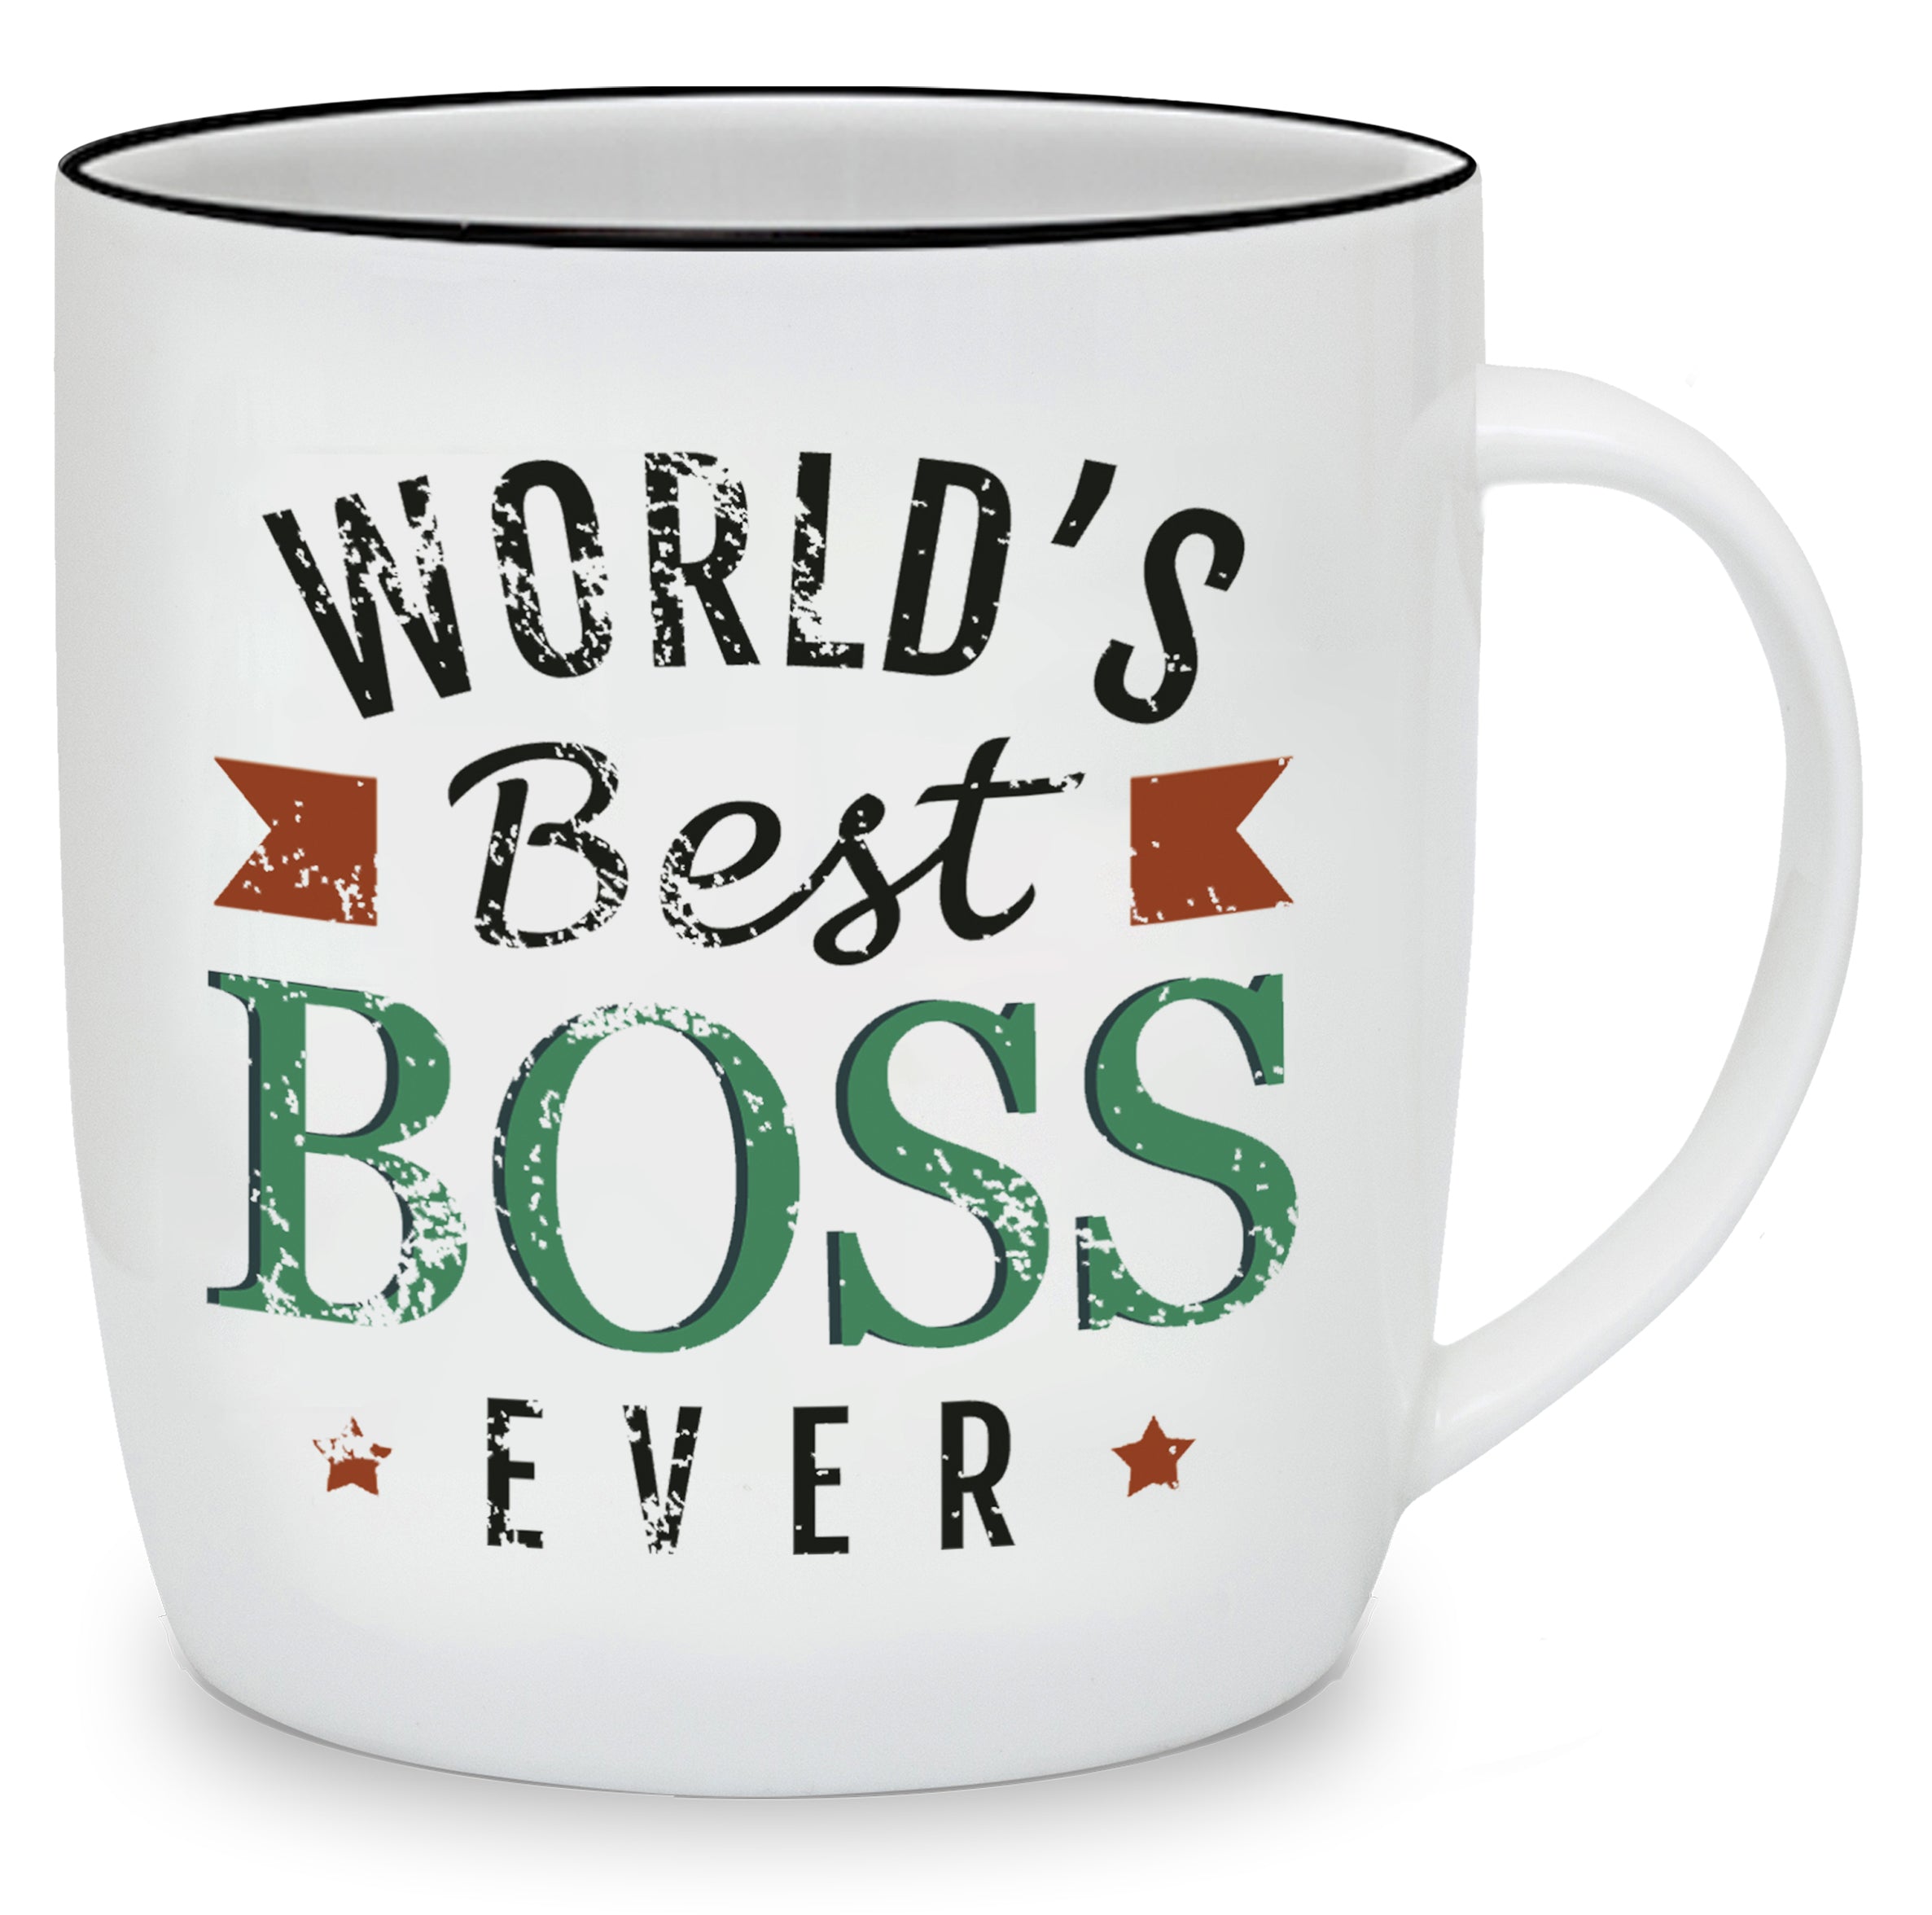 Worlds Best Boss Ever Coffee Mug